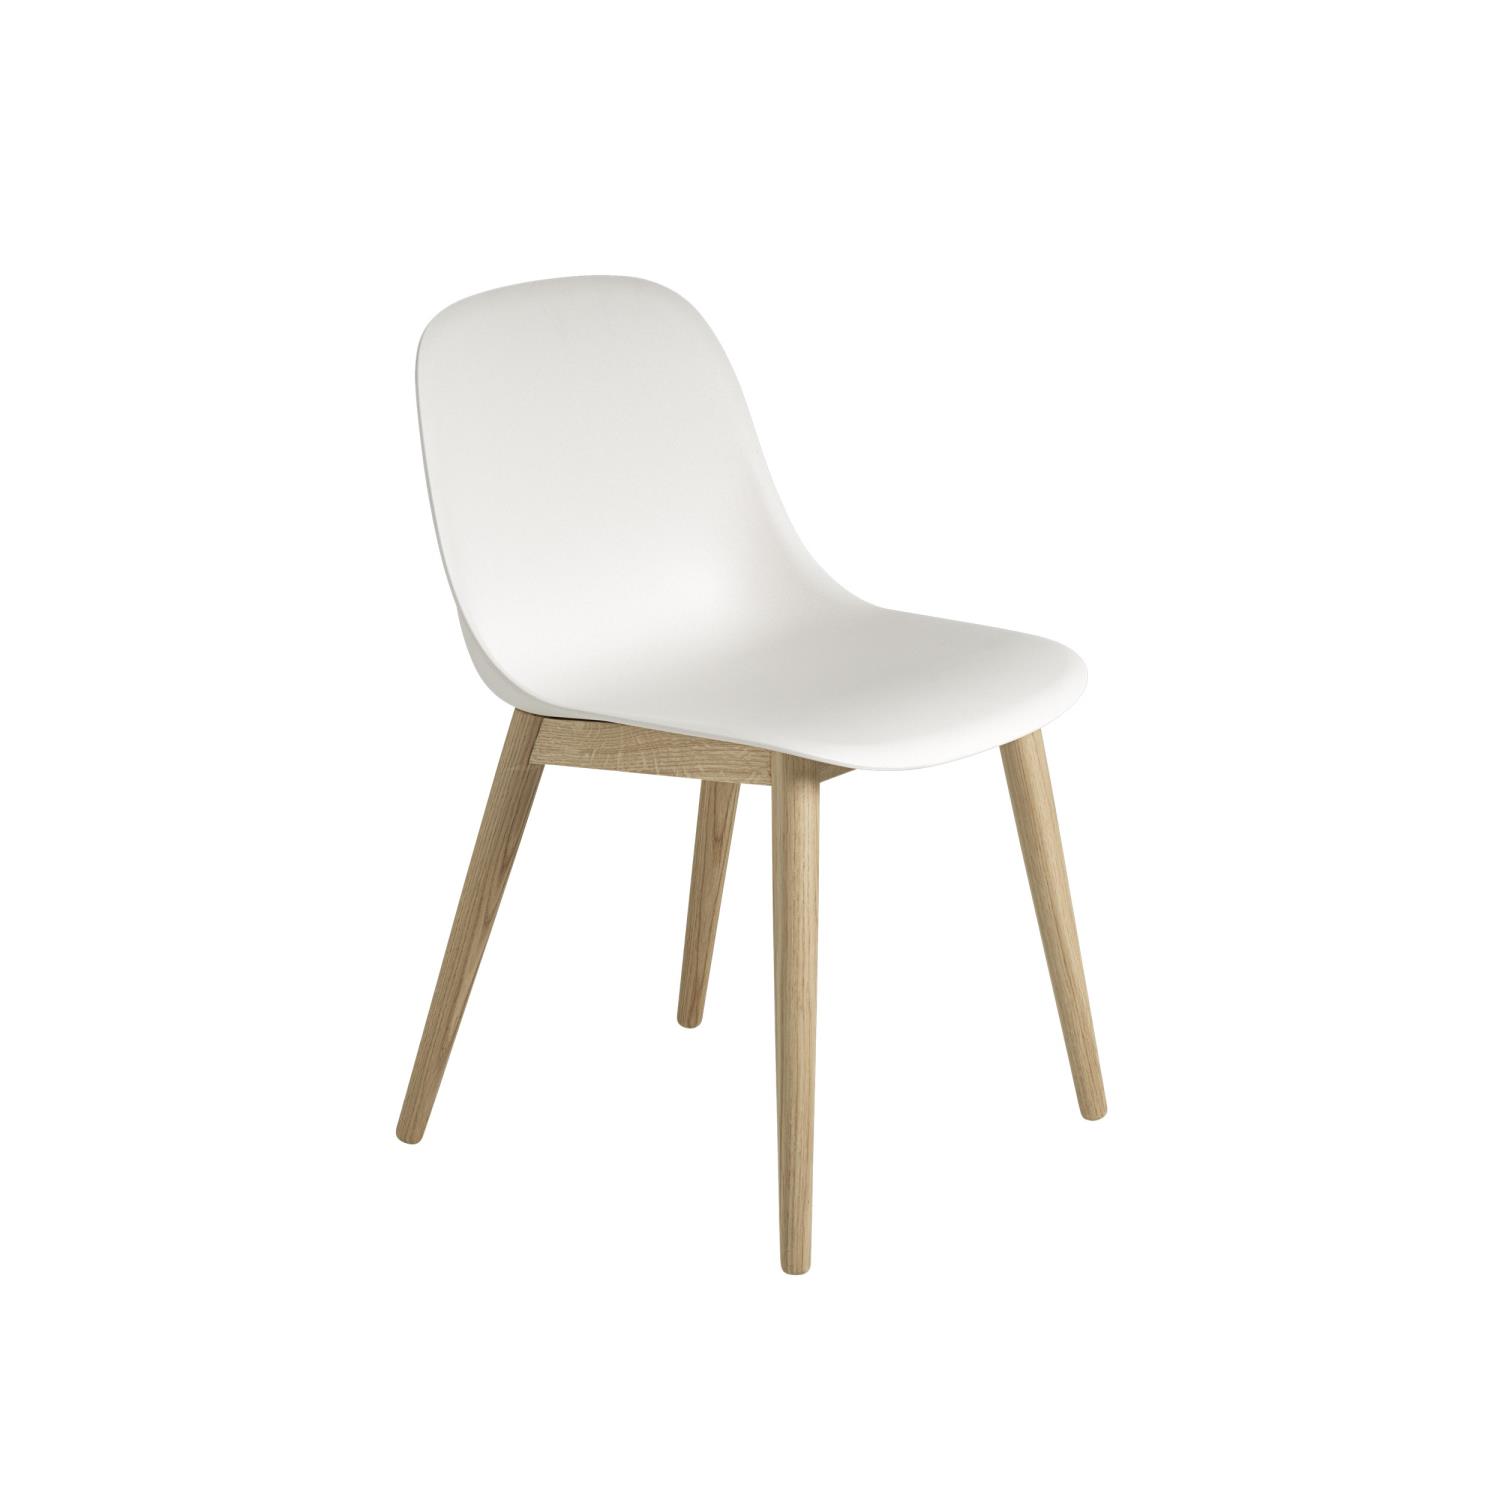 Muuto - Fiber Side Chair Wood Base - Natural White and Oak